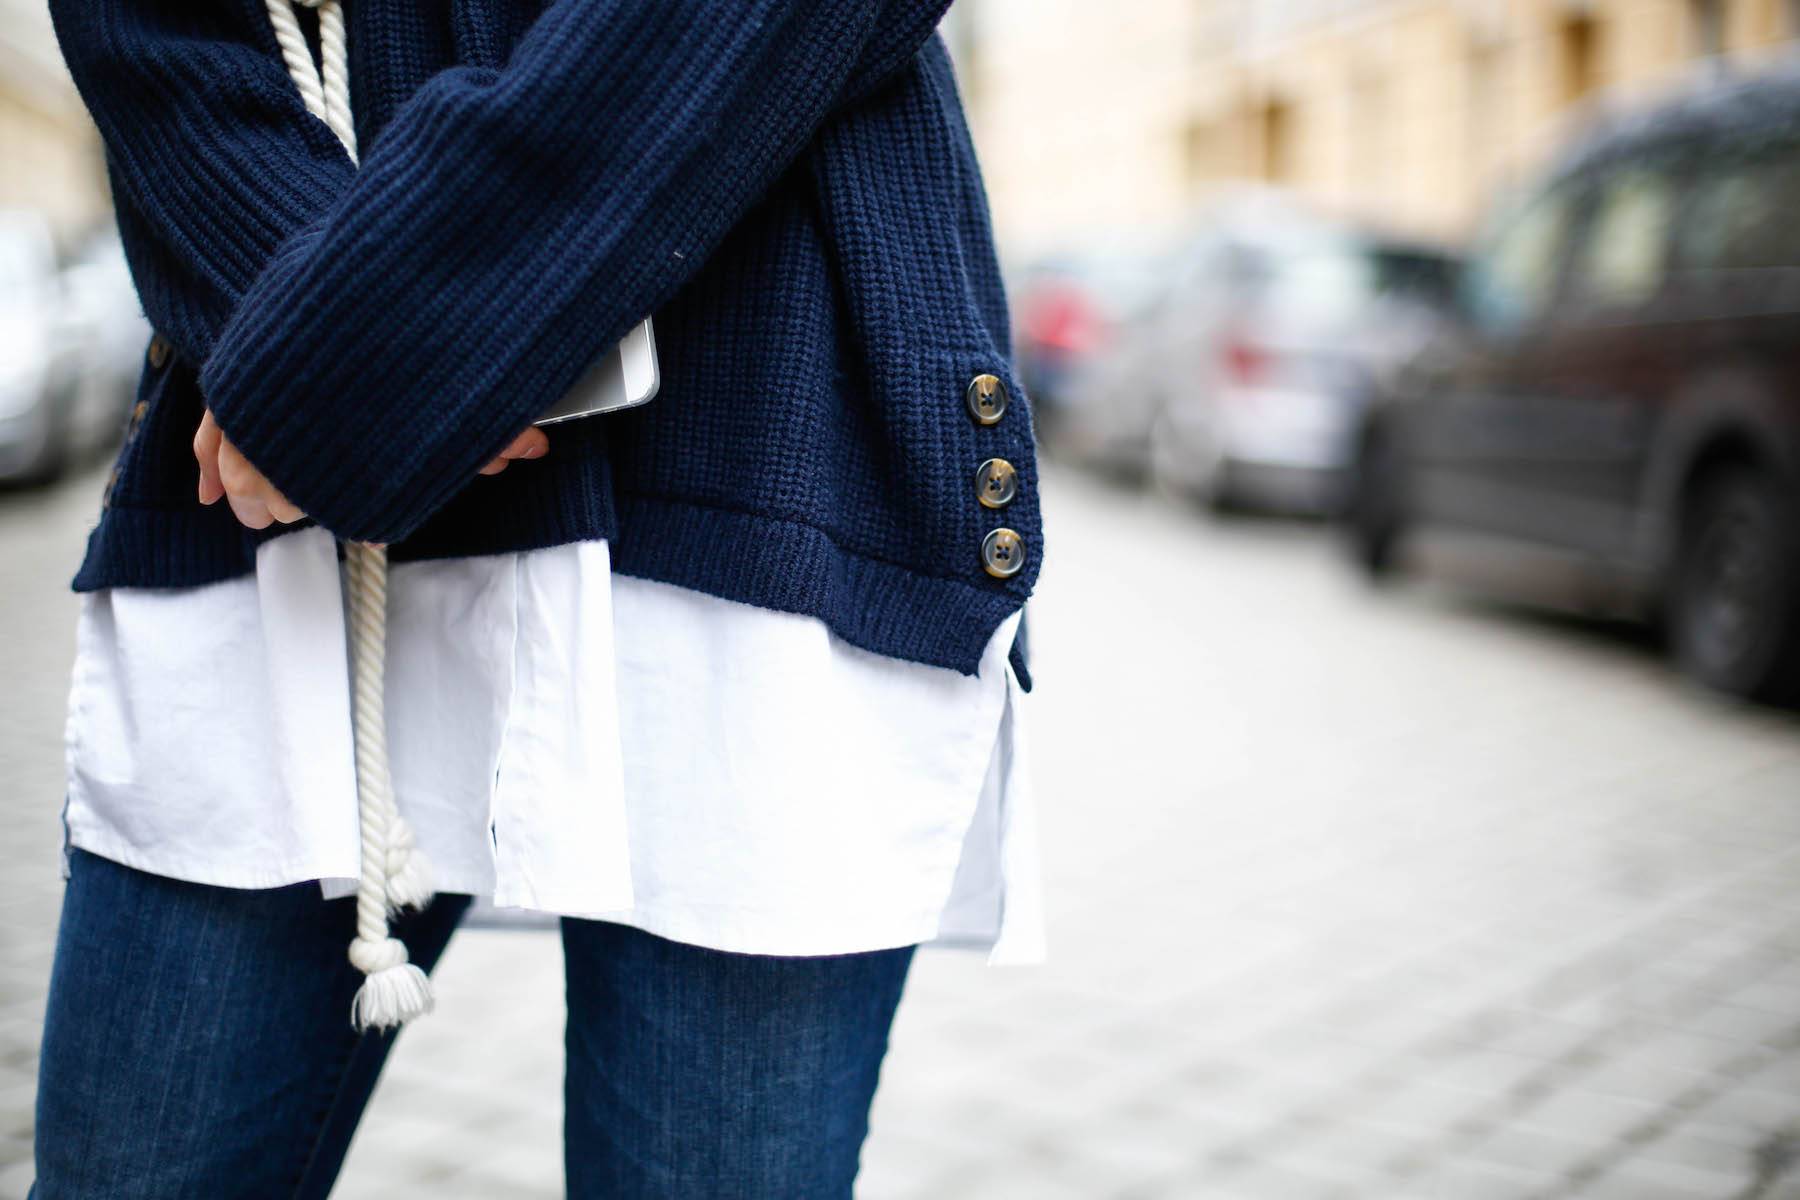 streetstyle münchen - munich - fashionblog - german fashionblogger - personal style - vintage - schirmmütze - zara booties - lackstiefel - layering - strick - weiße bluse - white blouse - inspiration - ootd